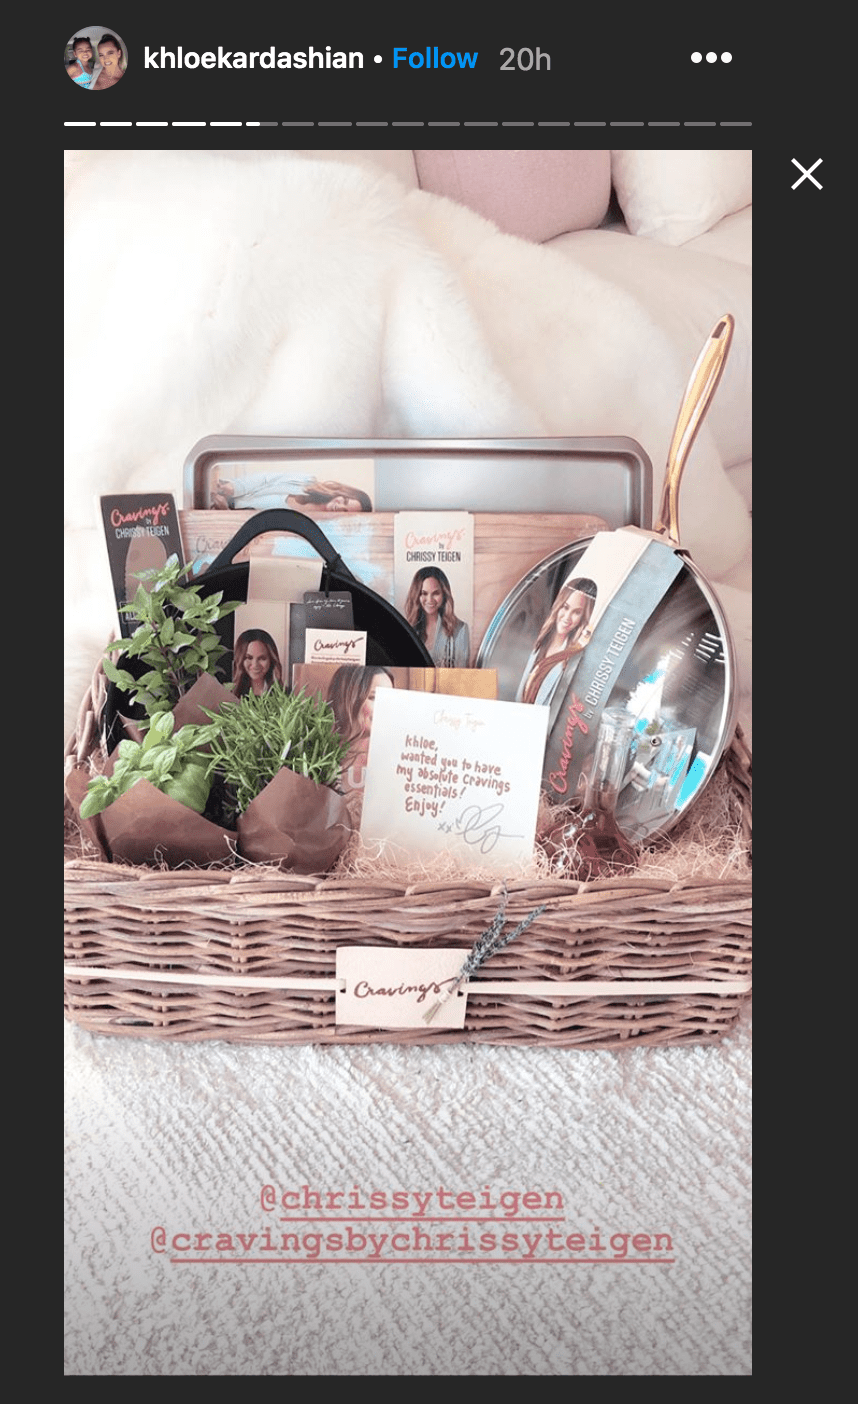 Khloe Kardashian shared a video of her opening the "Cravings" cooking line gift basket she received from Chrissy Teigen | Source: Instagram.com/khloekardashian